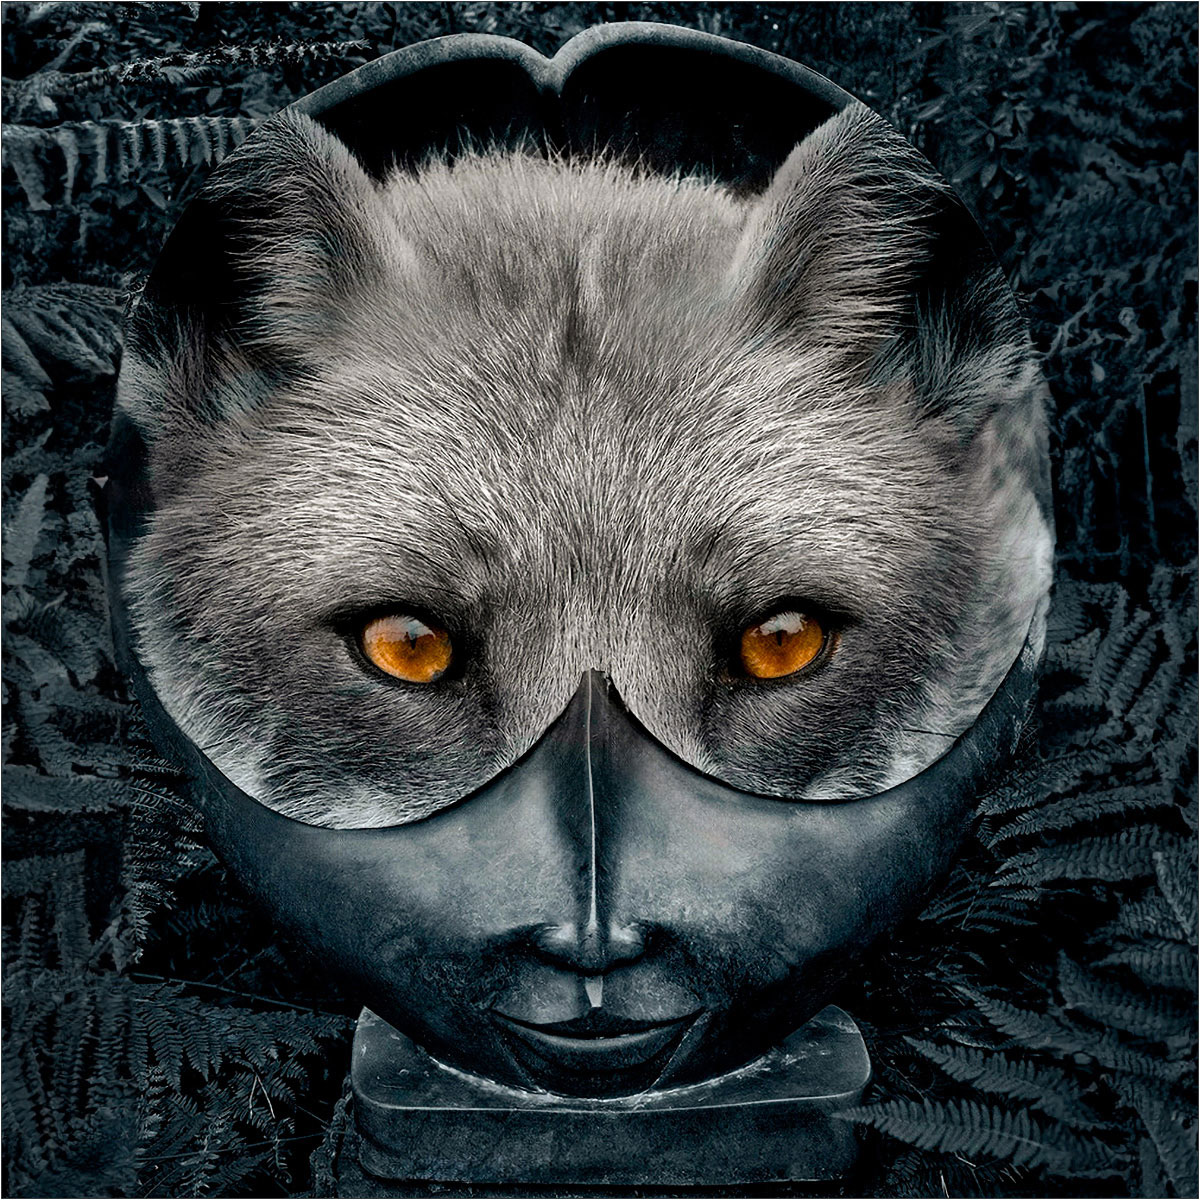 1200 10 Foxy Eyes By Claude Trew